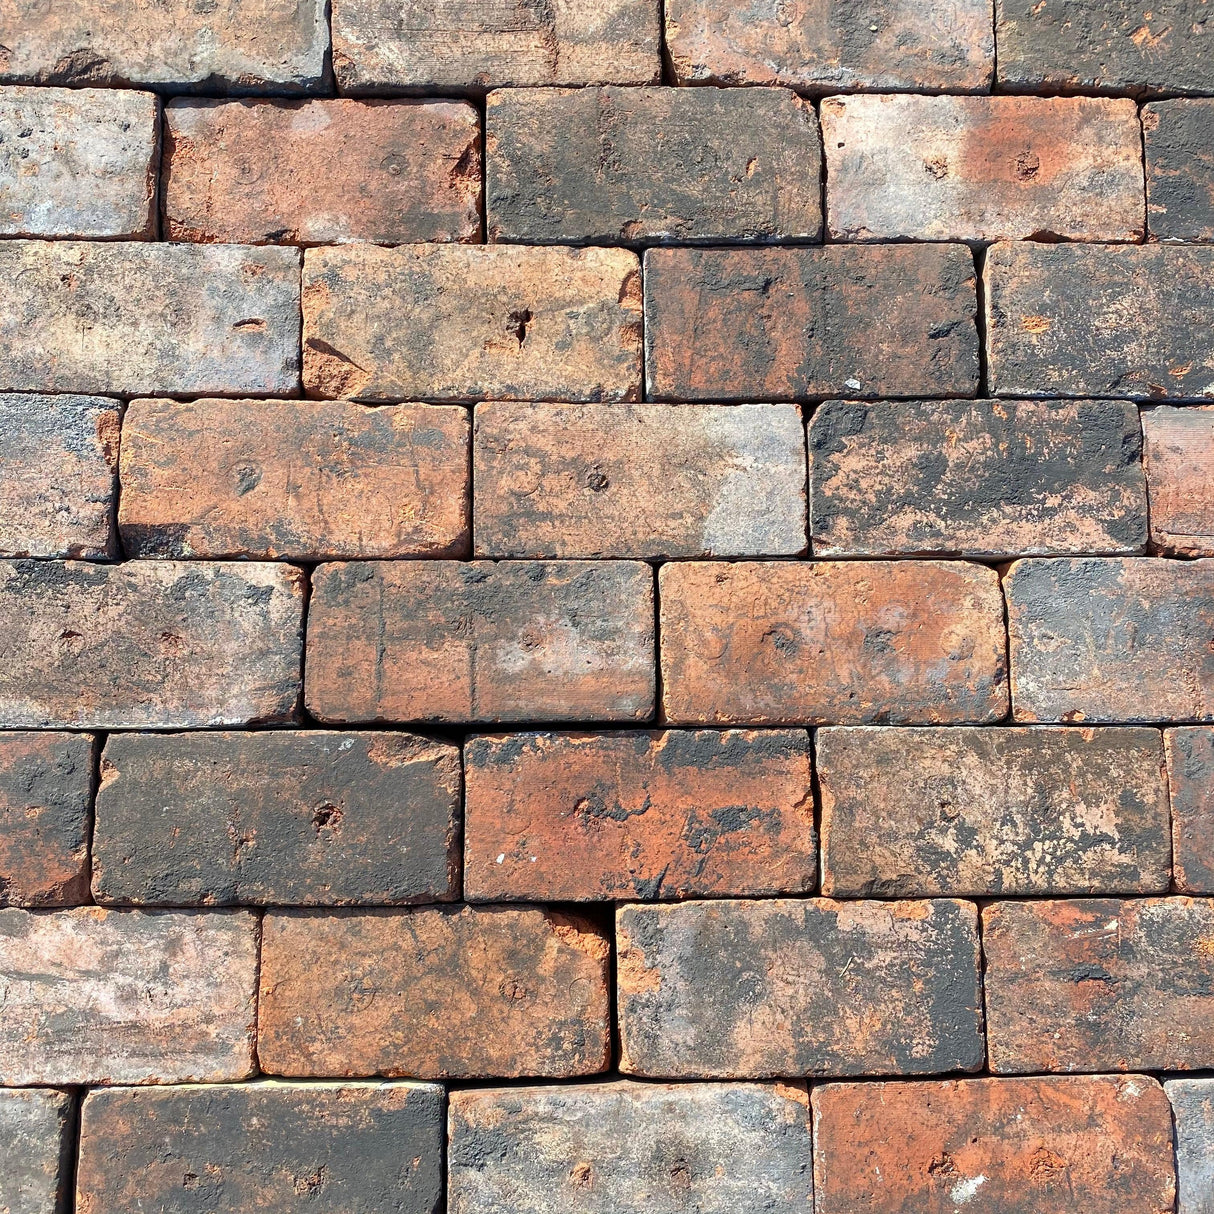 Reclaimed Common Paving Bricks | Pack of 250 Bricks - Reclaimed Brick Company